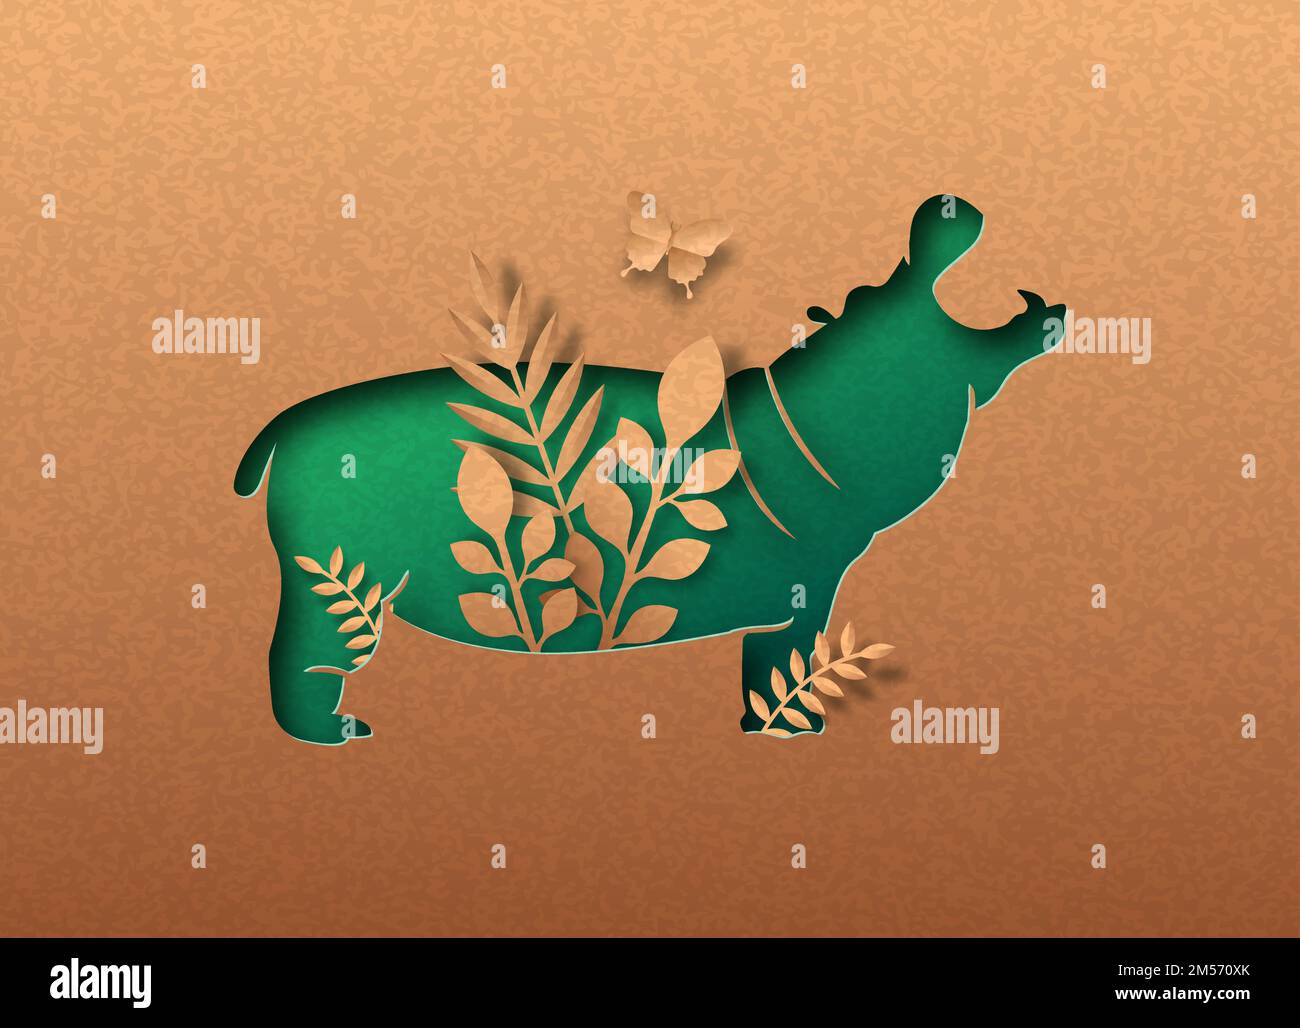 Grün Nilpferd Tier isoliert papercut Silhouette mit tropischen Pflanzenblatt innen. Recycling Papier Textur Ausschnitt Konzept für afrika Safari, wildl Stock Vektor